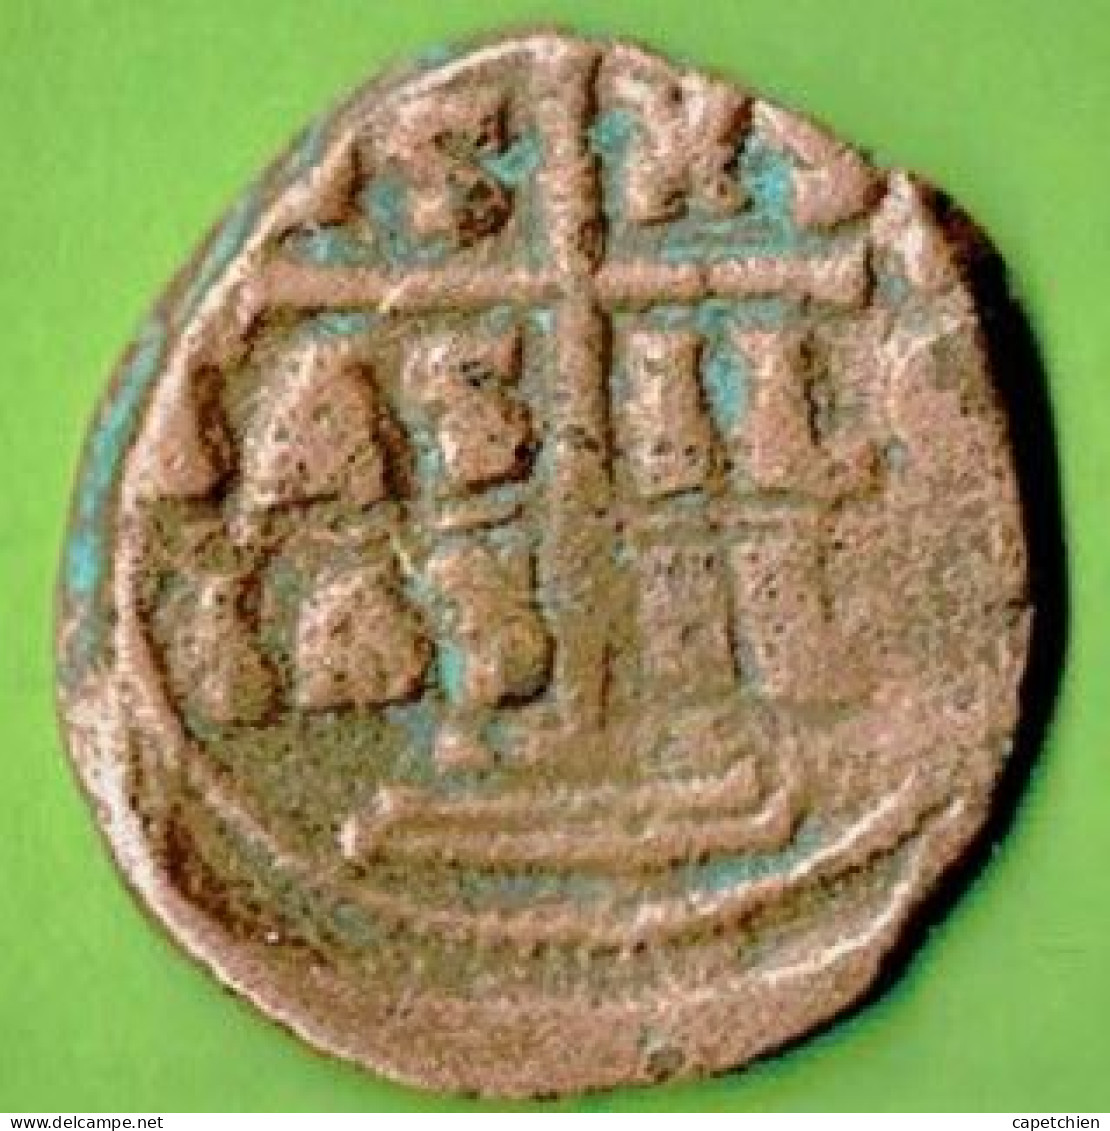 MONNAIE BYZANTINE A IDENTIFIER / 7.96 G /  Max 26.3  Mm / En Partie Désoxidée - Byzantinische Münzen